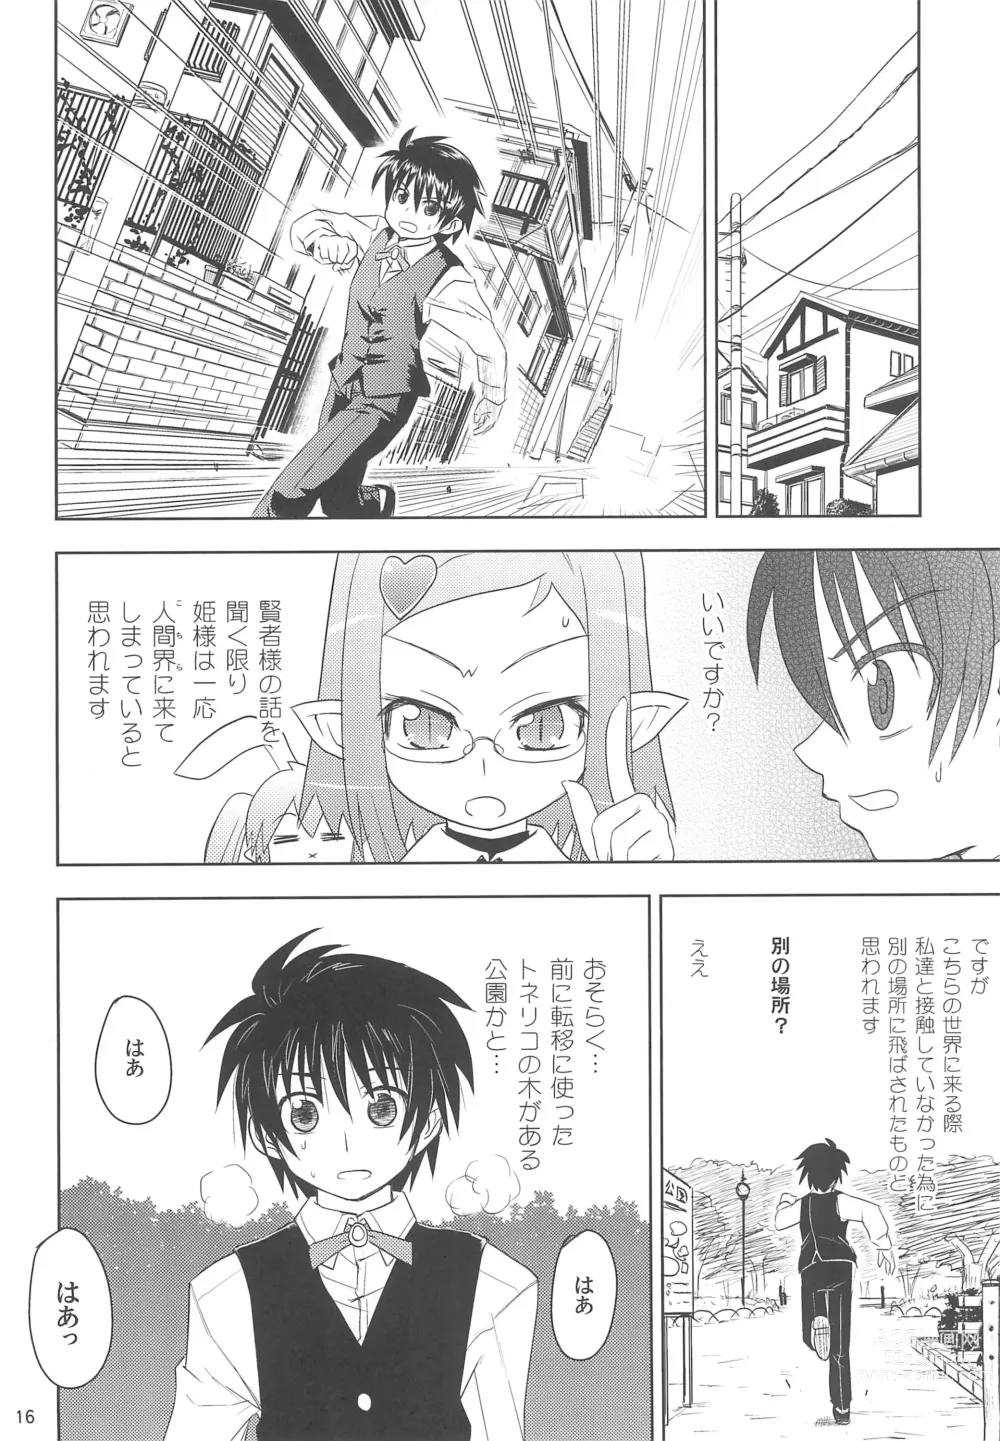 Page 16 of doujinshi Maigo no Maigo no Hime-sama Plus